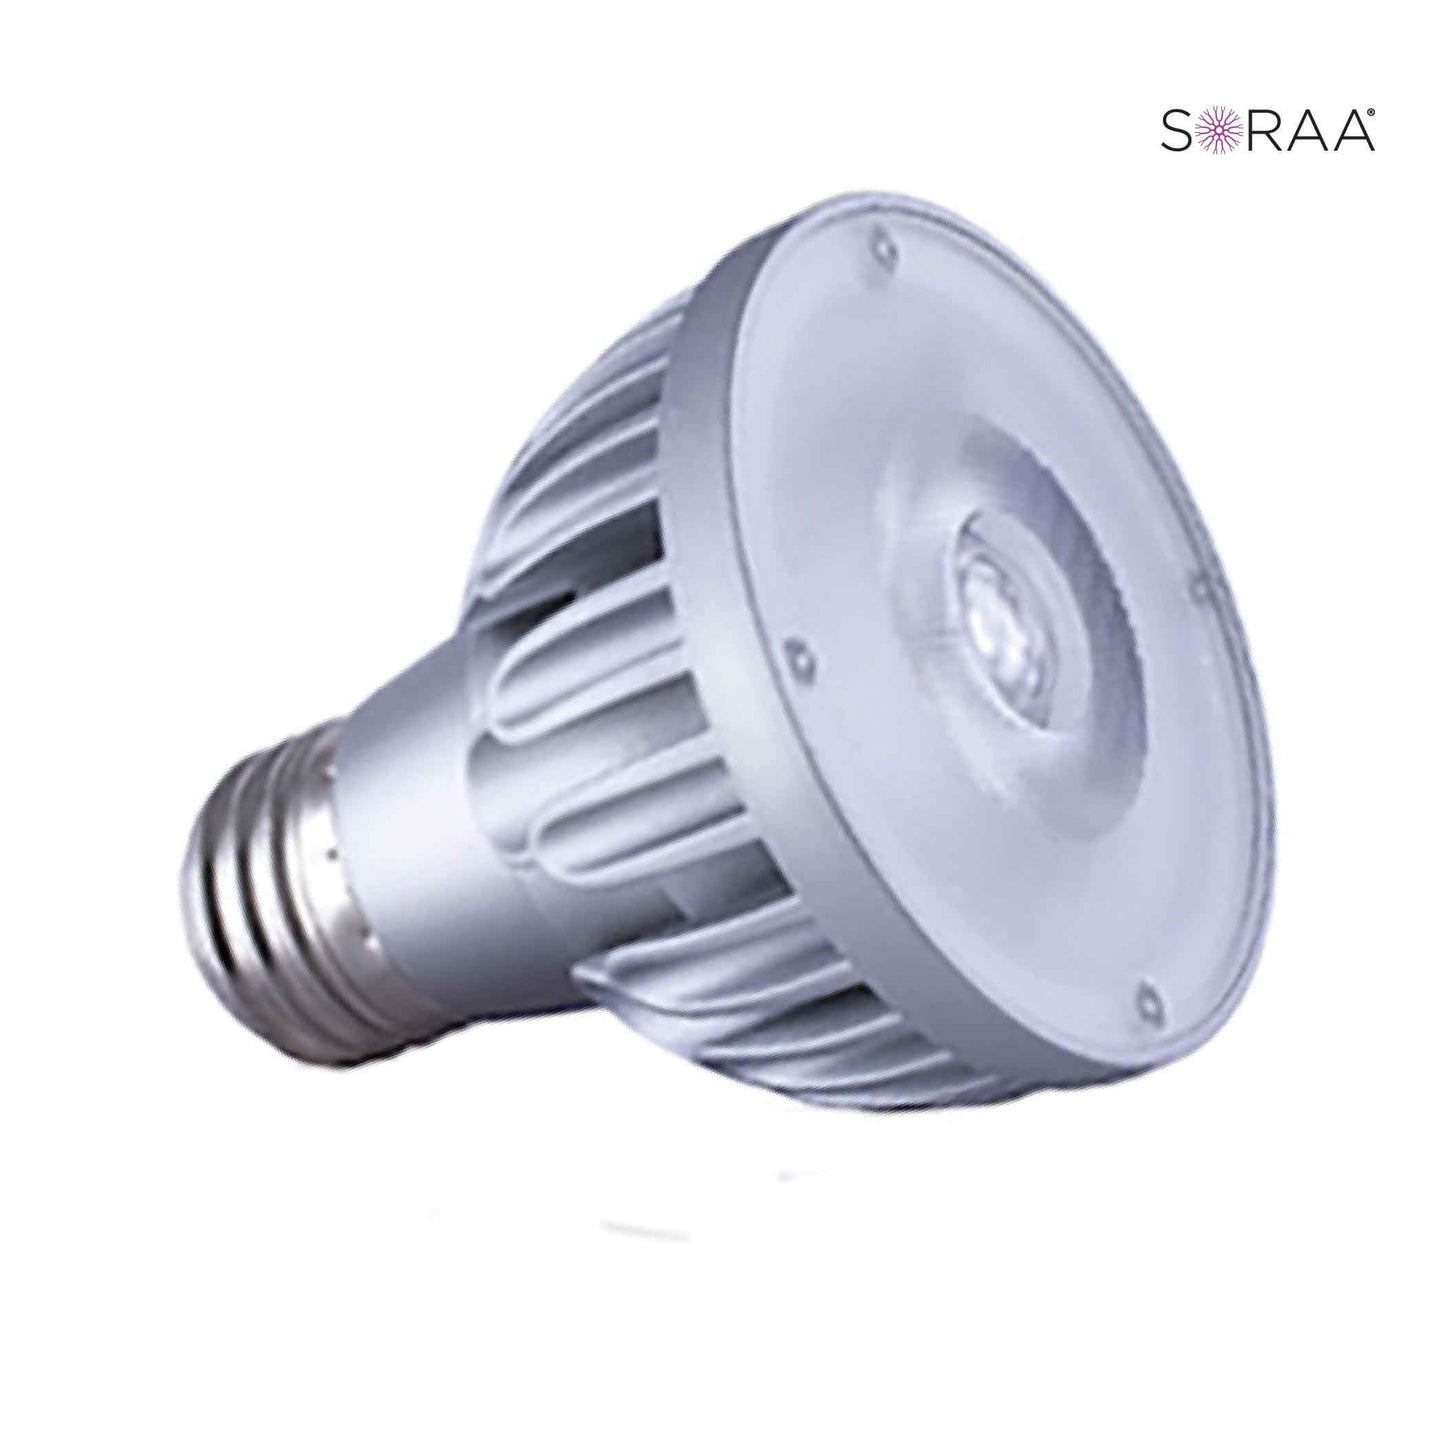 SORAA LED PAR20 MEDIUM SCREW (E26) 10.8W DIMMABLE LIGHT BULB 2700K/WARM WHITE 90W HALOGEN EQUIVALENT 1PK (777262)